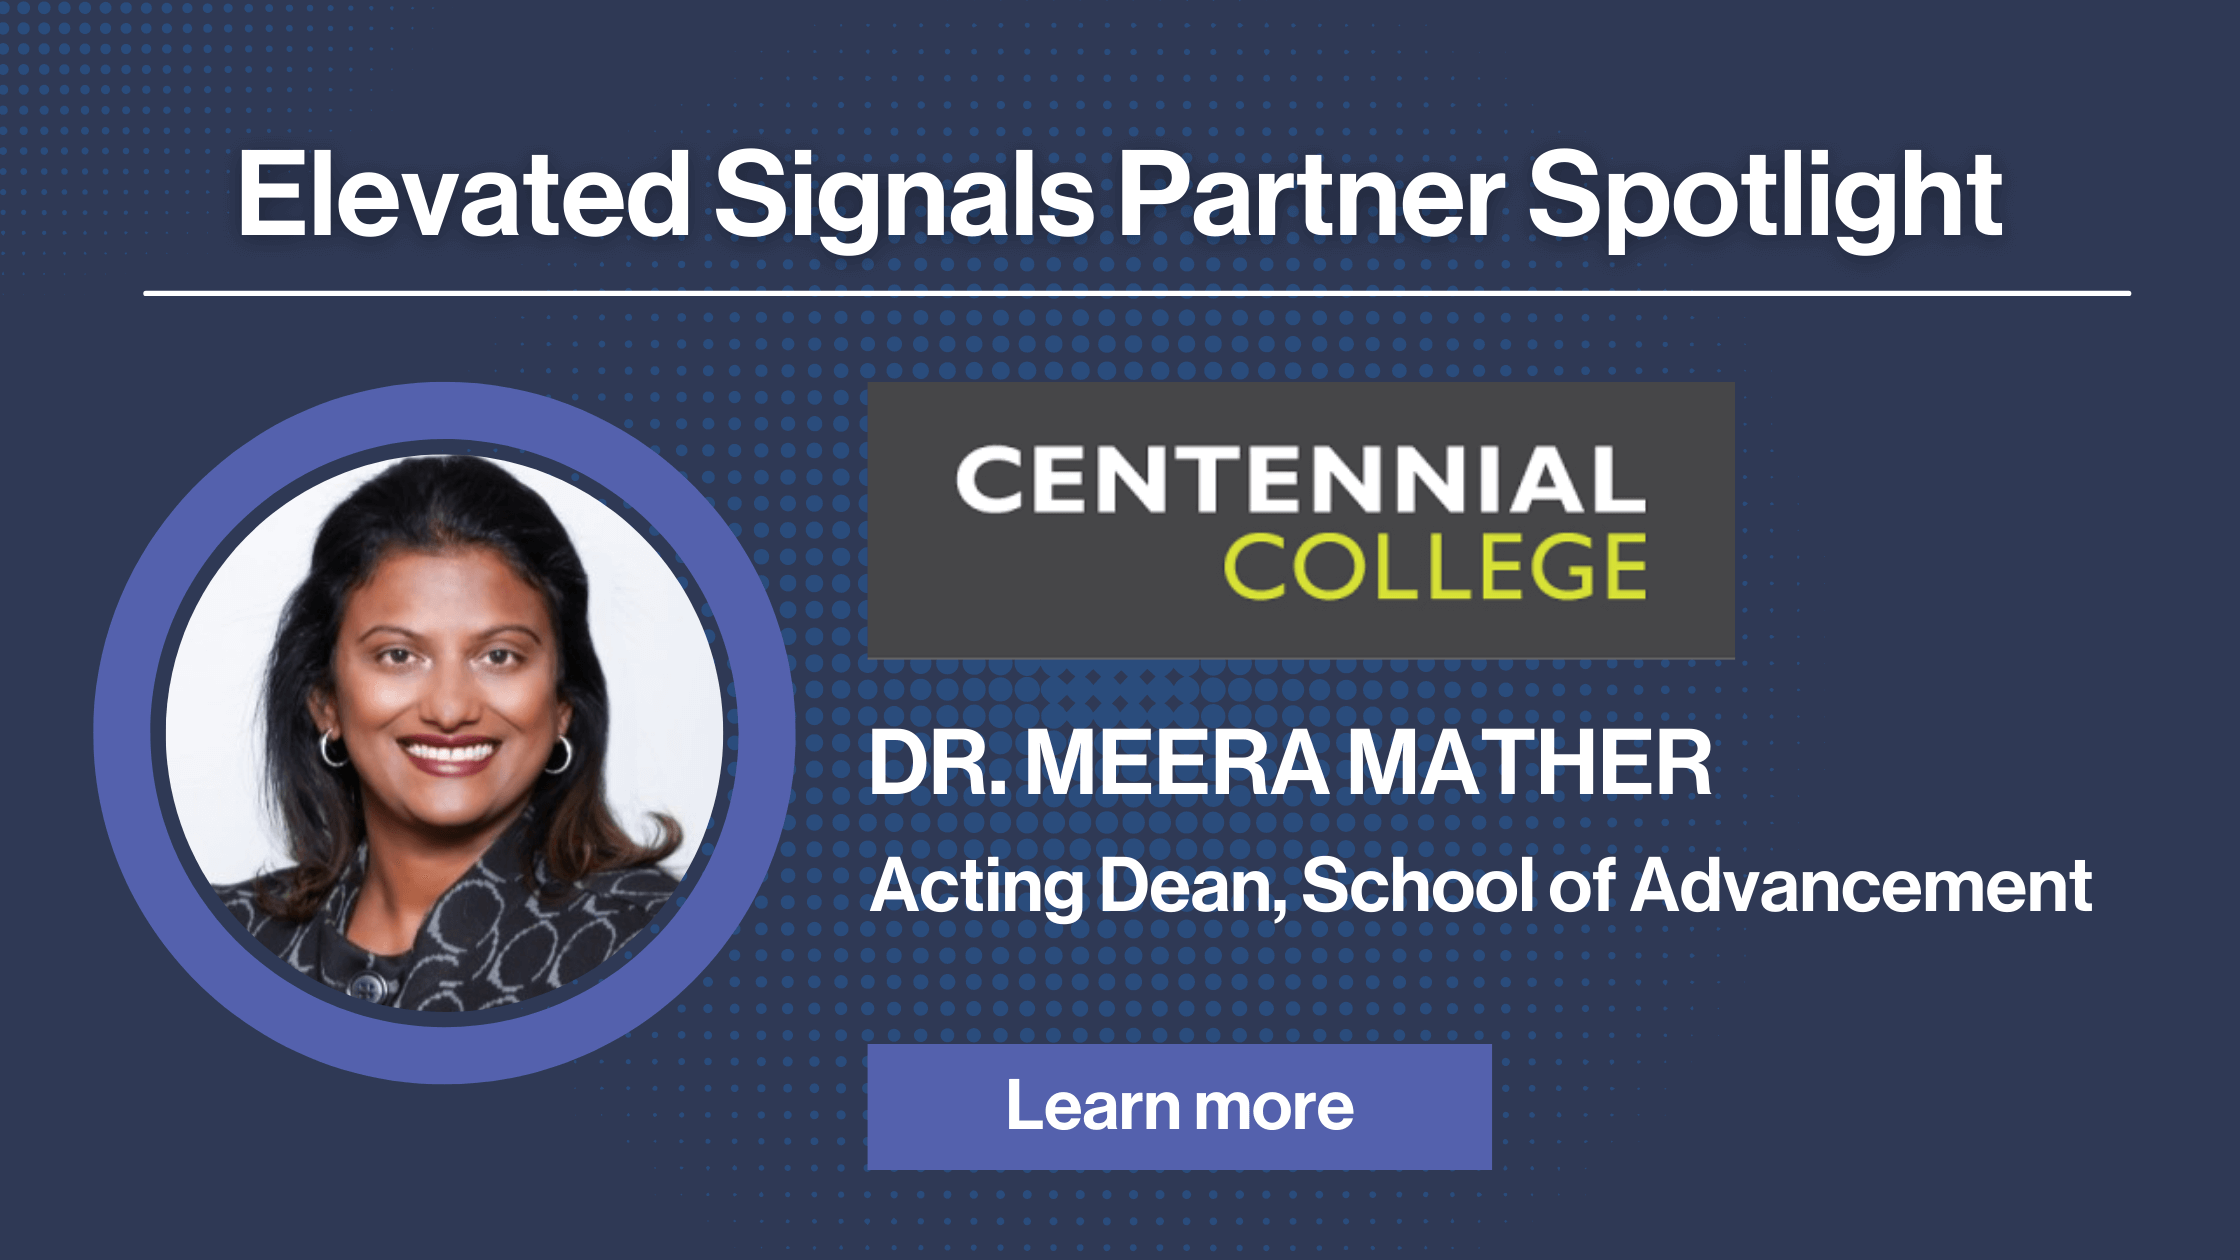 Elevated Signals Partner Spotlight: Centennial College 